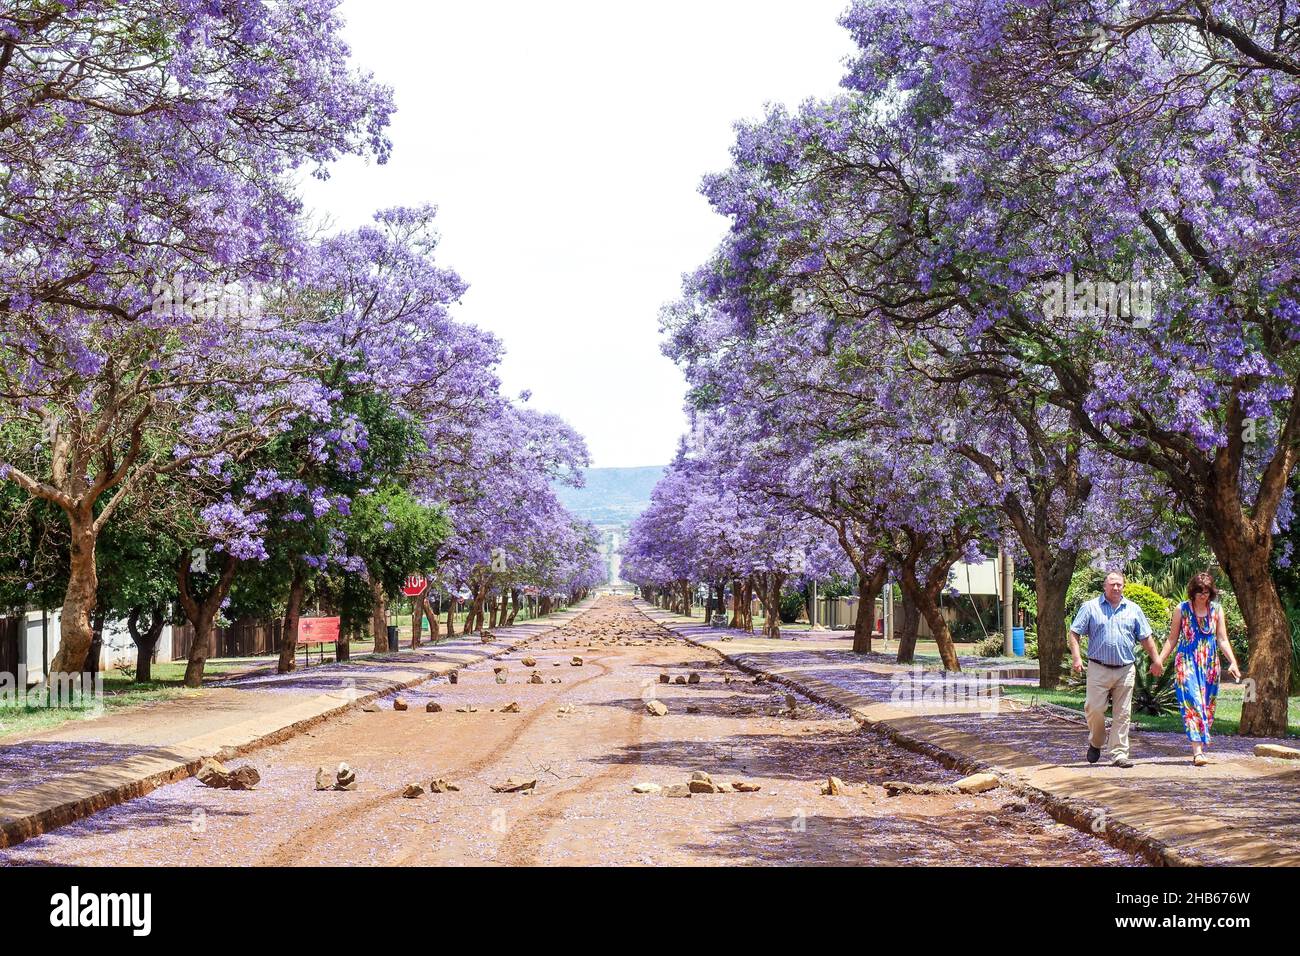 Purple jacaranda trees in South Africa Stock Photo